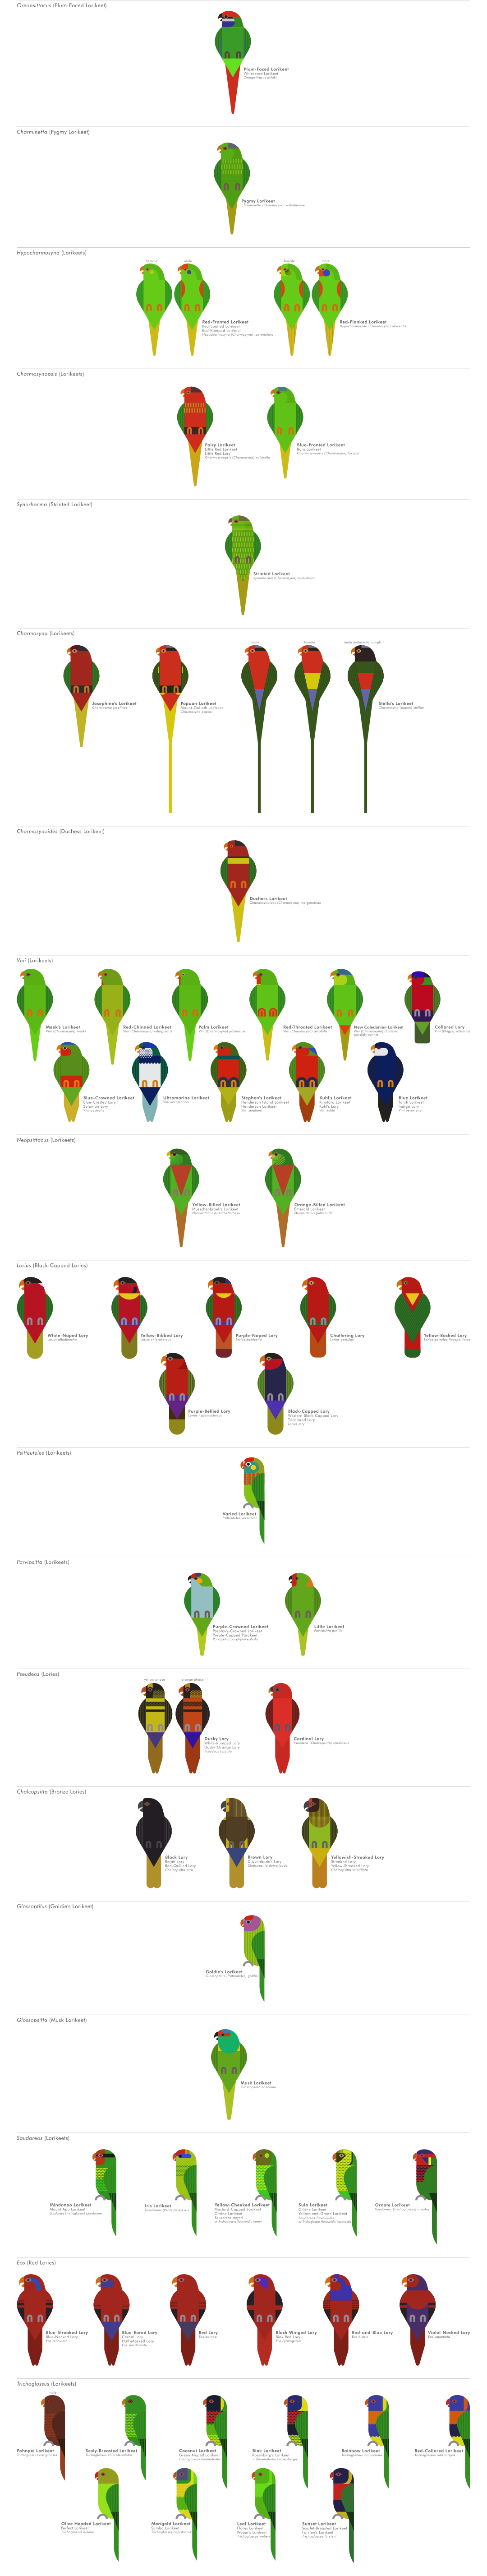 scott partridge - ave - avian vector encyclopedia - lorikeets - vector bird art